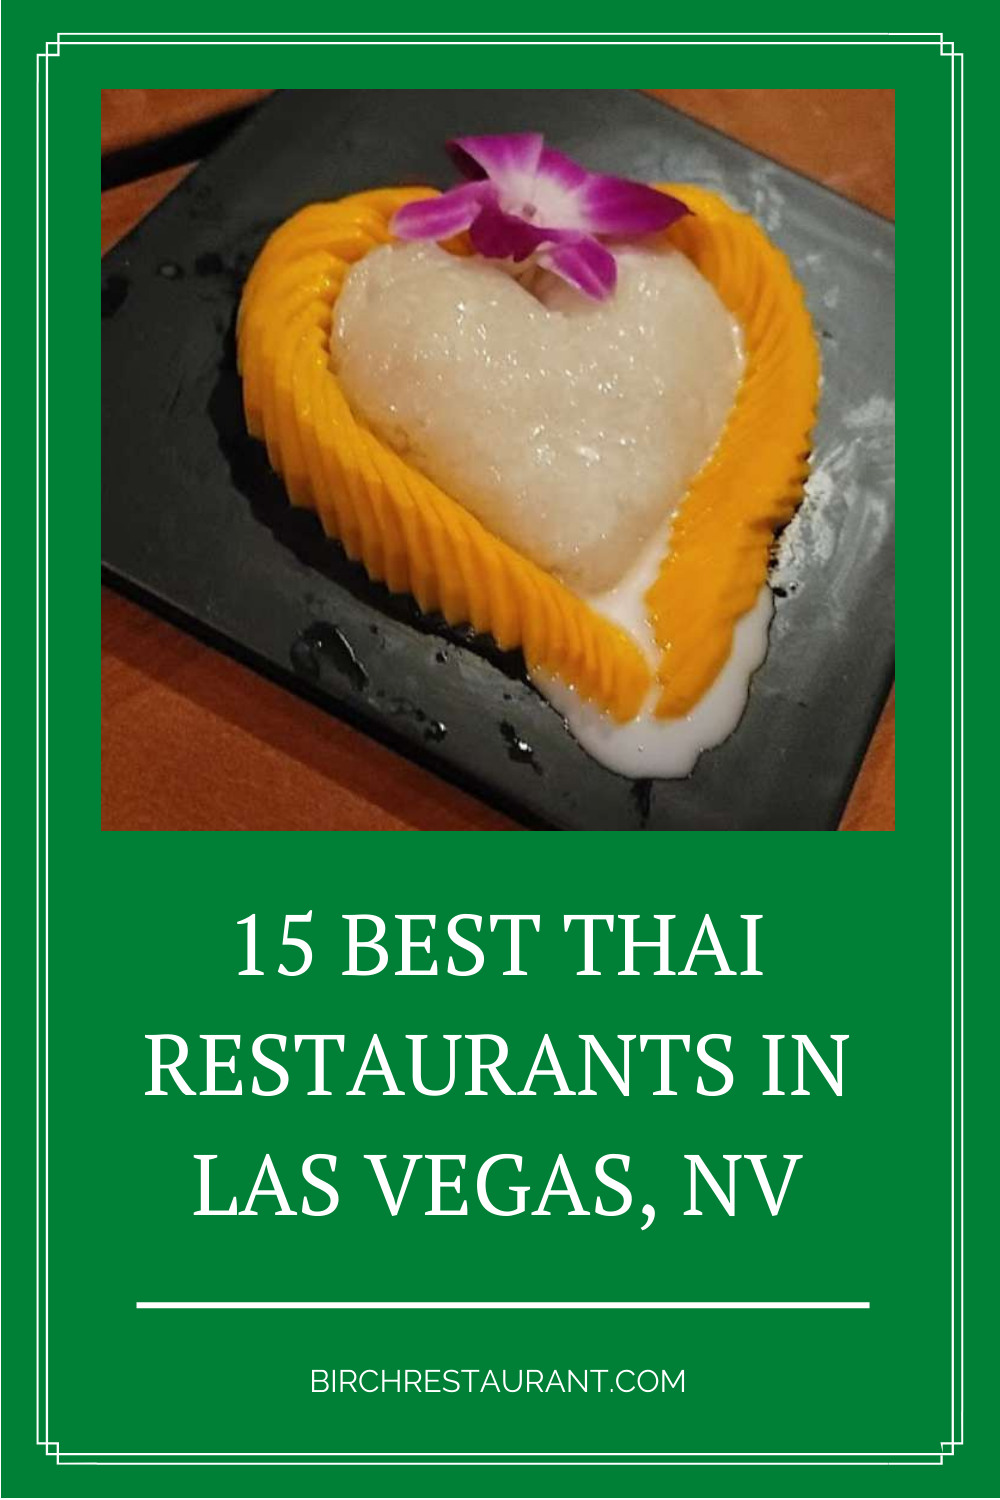 Thai Restaurants in Las Vegas, NV